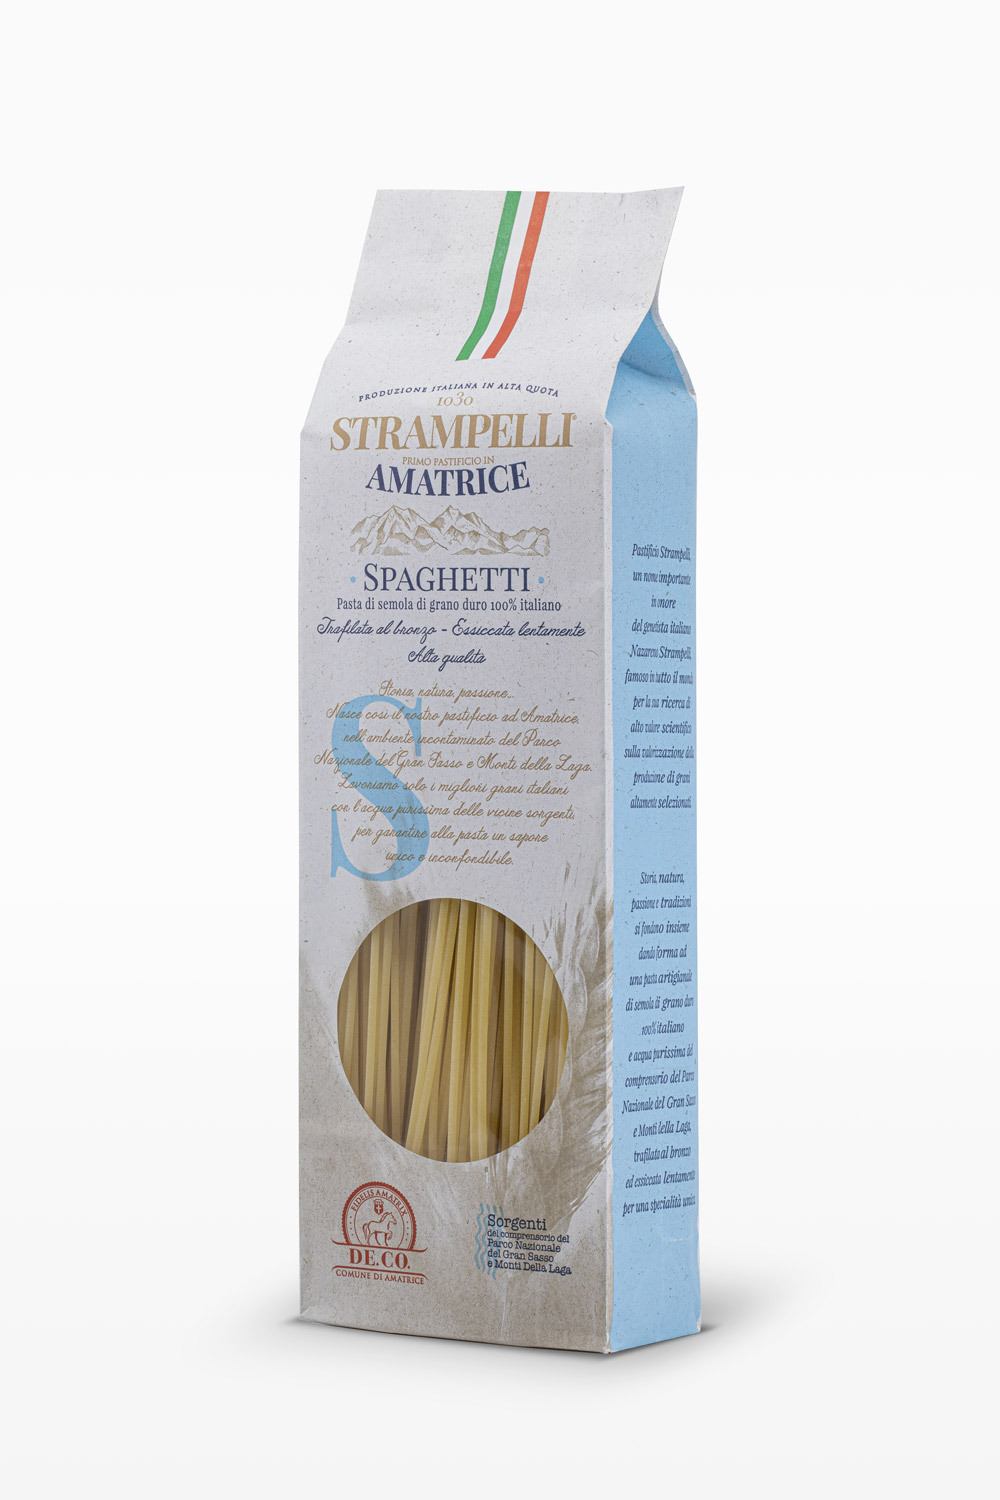 Spaghetti - Durum wheat semolina pasta, rough and porous, 100% Italian wheat, slow drying at low temperature.